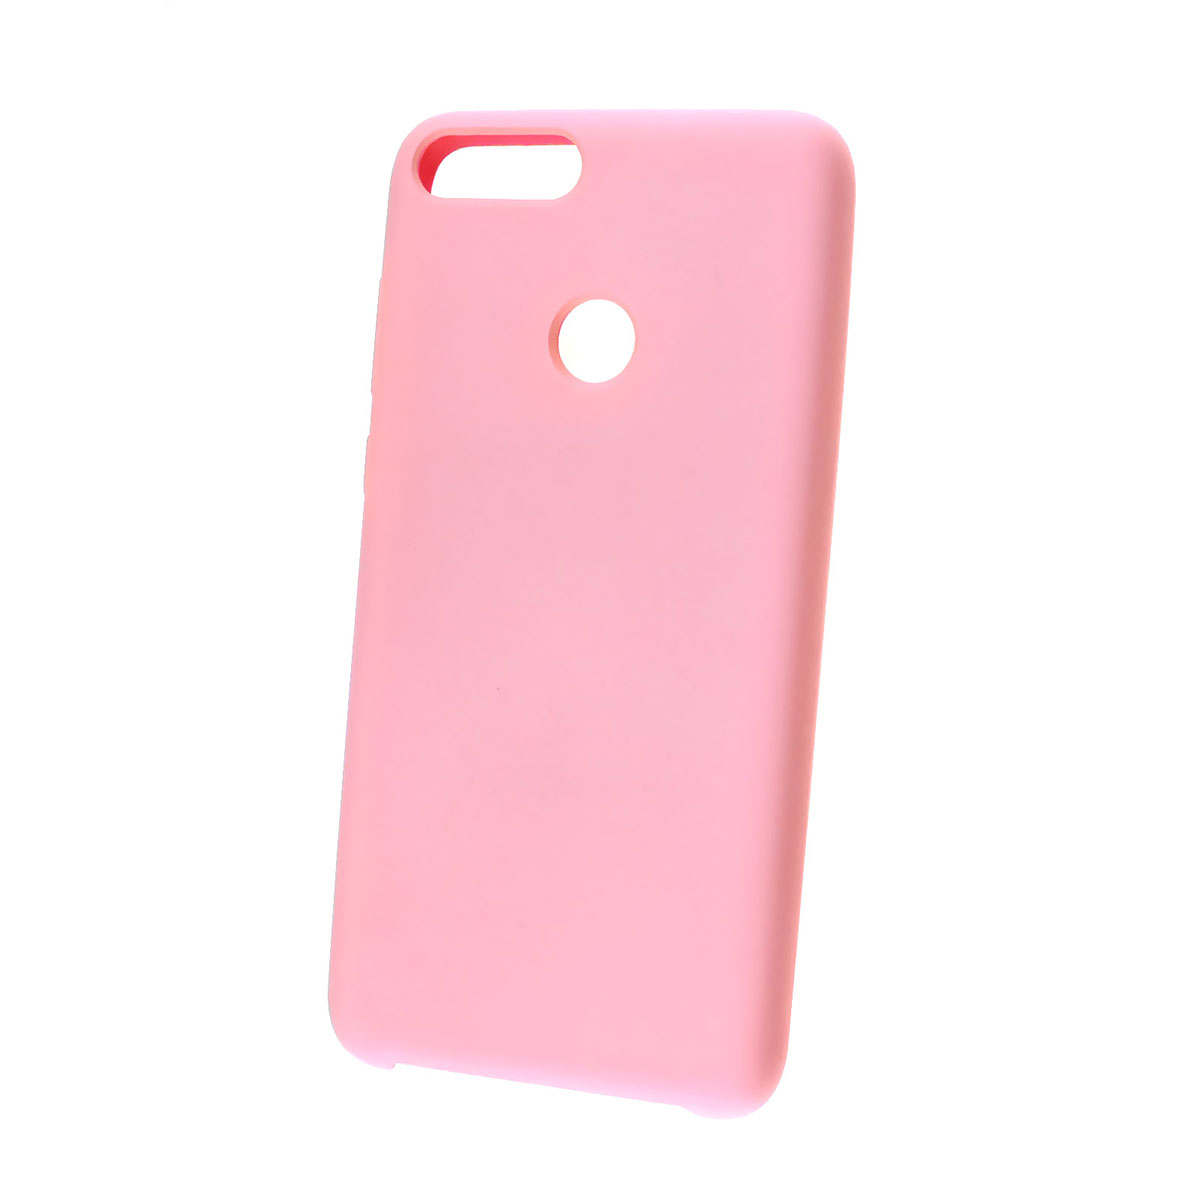 Чехол накладка Silicon Cover для HUAWEI Honor 9 Lite, силикон, бархат, цвет розовый.